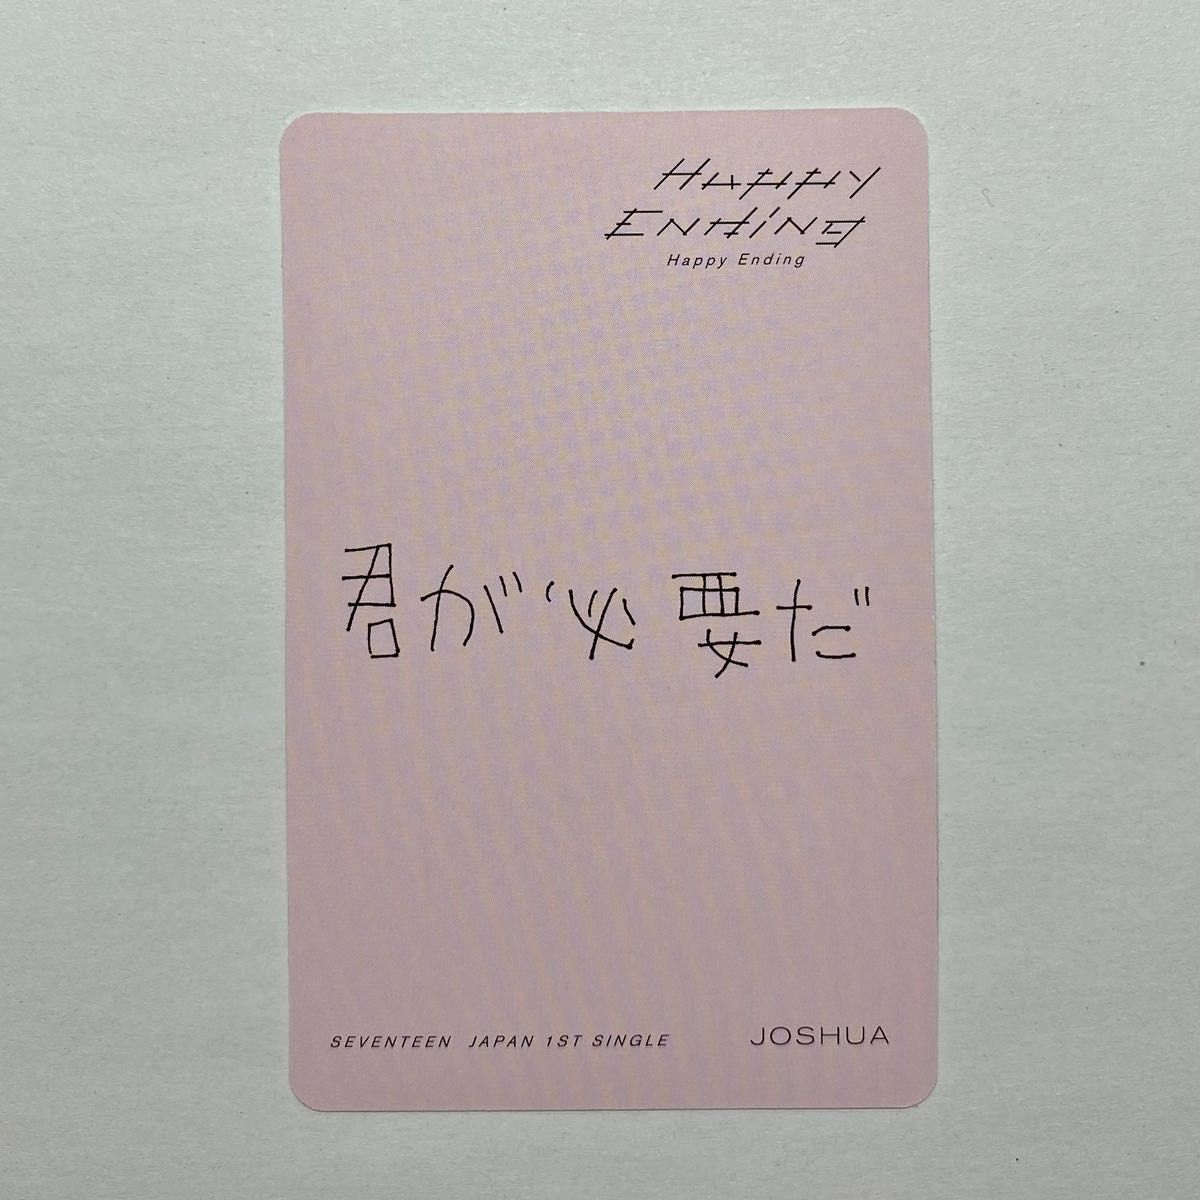 SEVENTEEN ジョシュア トレカ happy ending ハピエン carat盤 JOSHUA セブチ